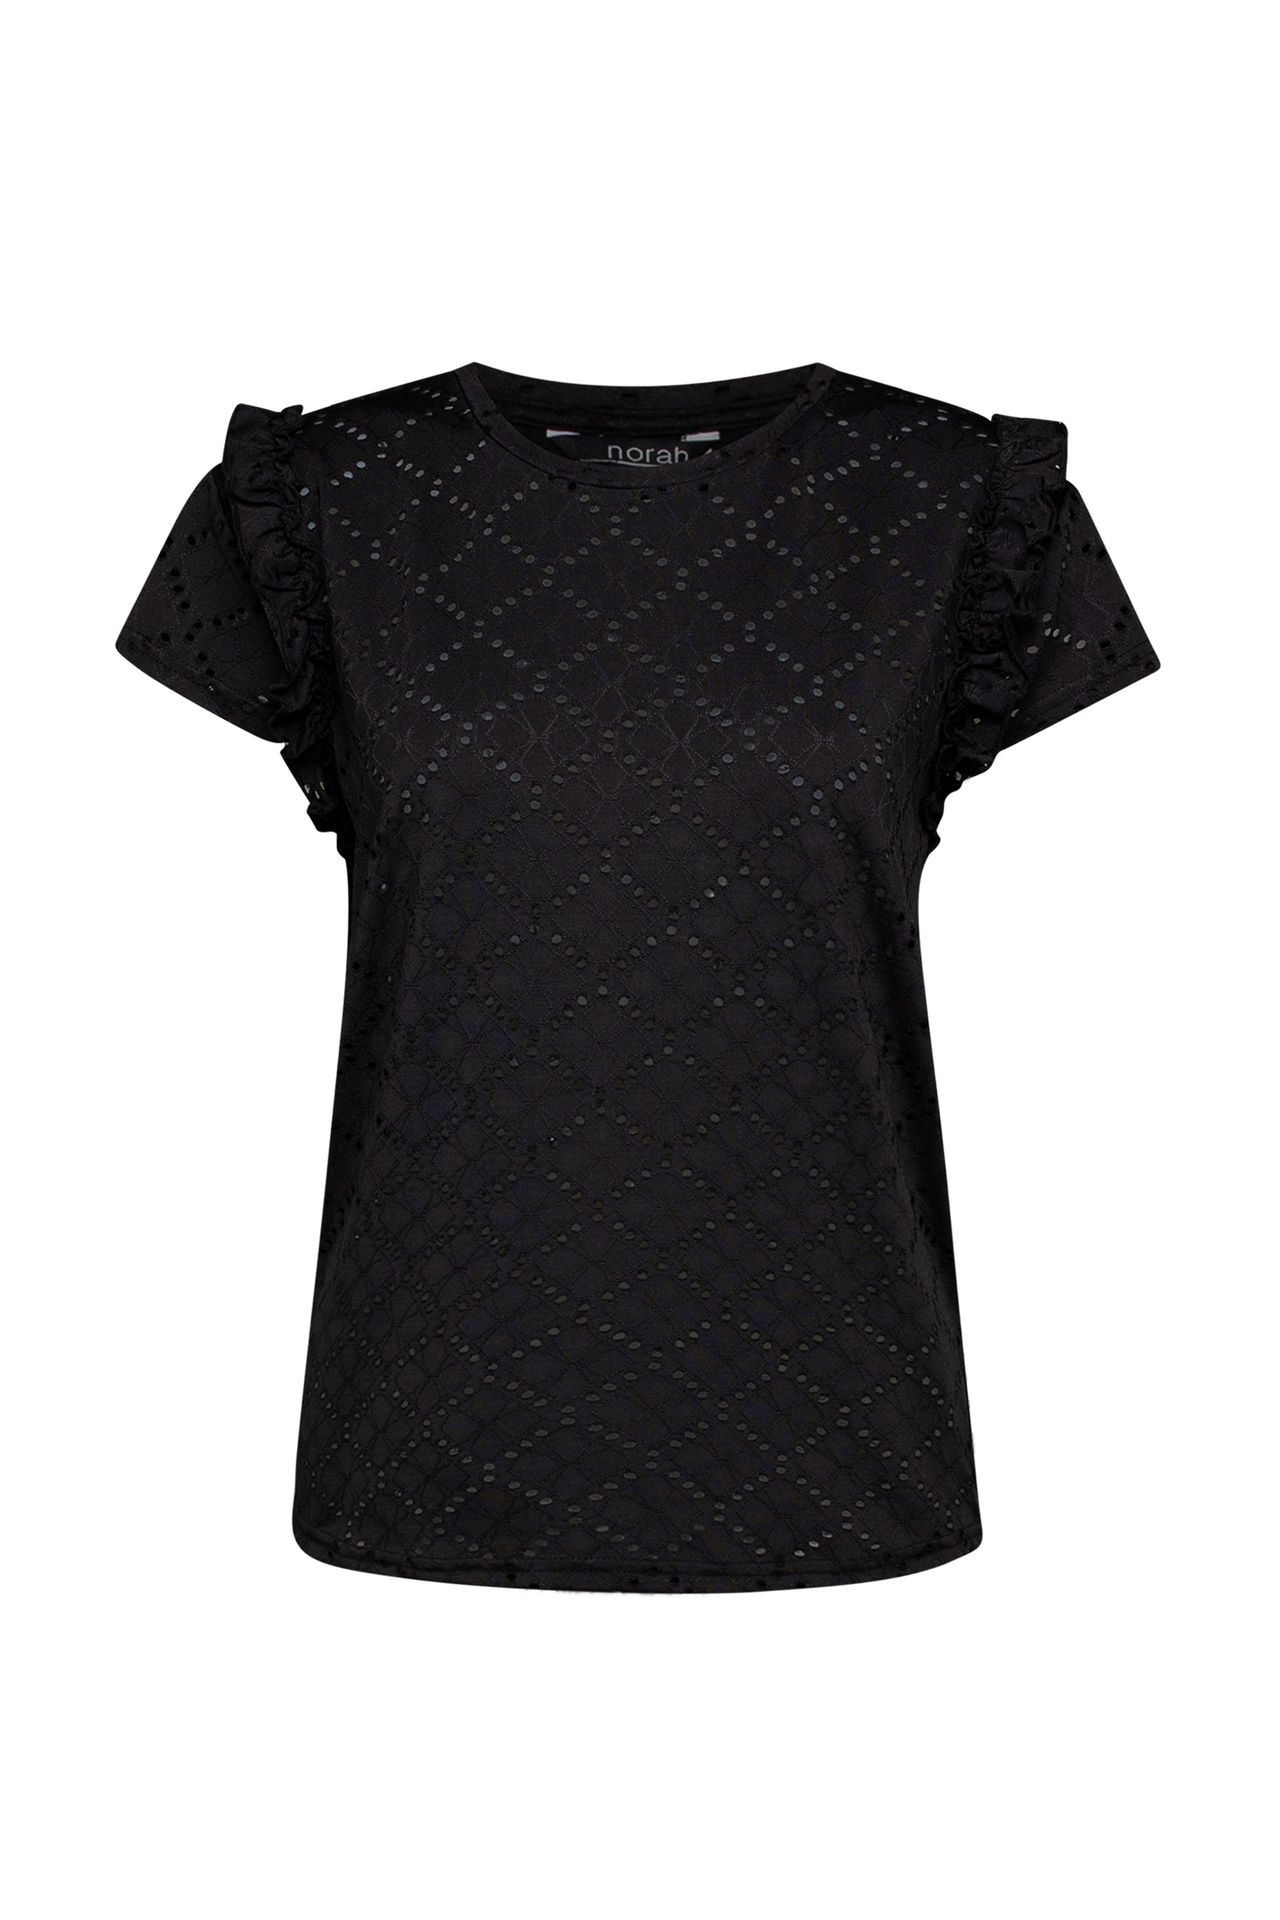 Norah Shirt zwart opengewerkt  black 210972-001